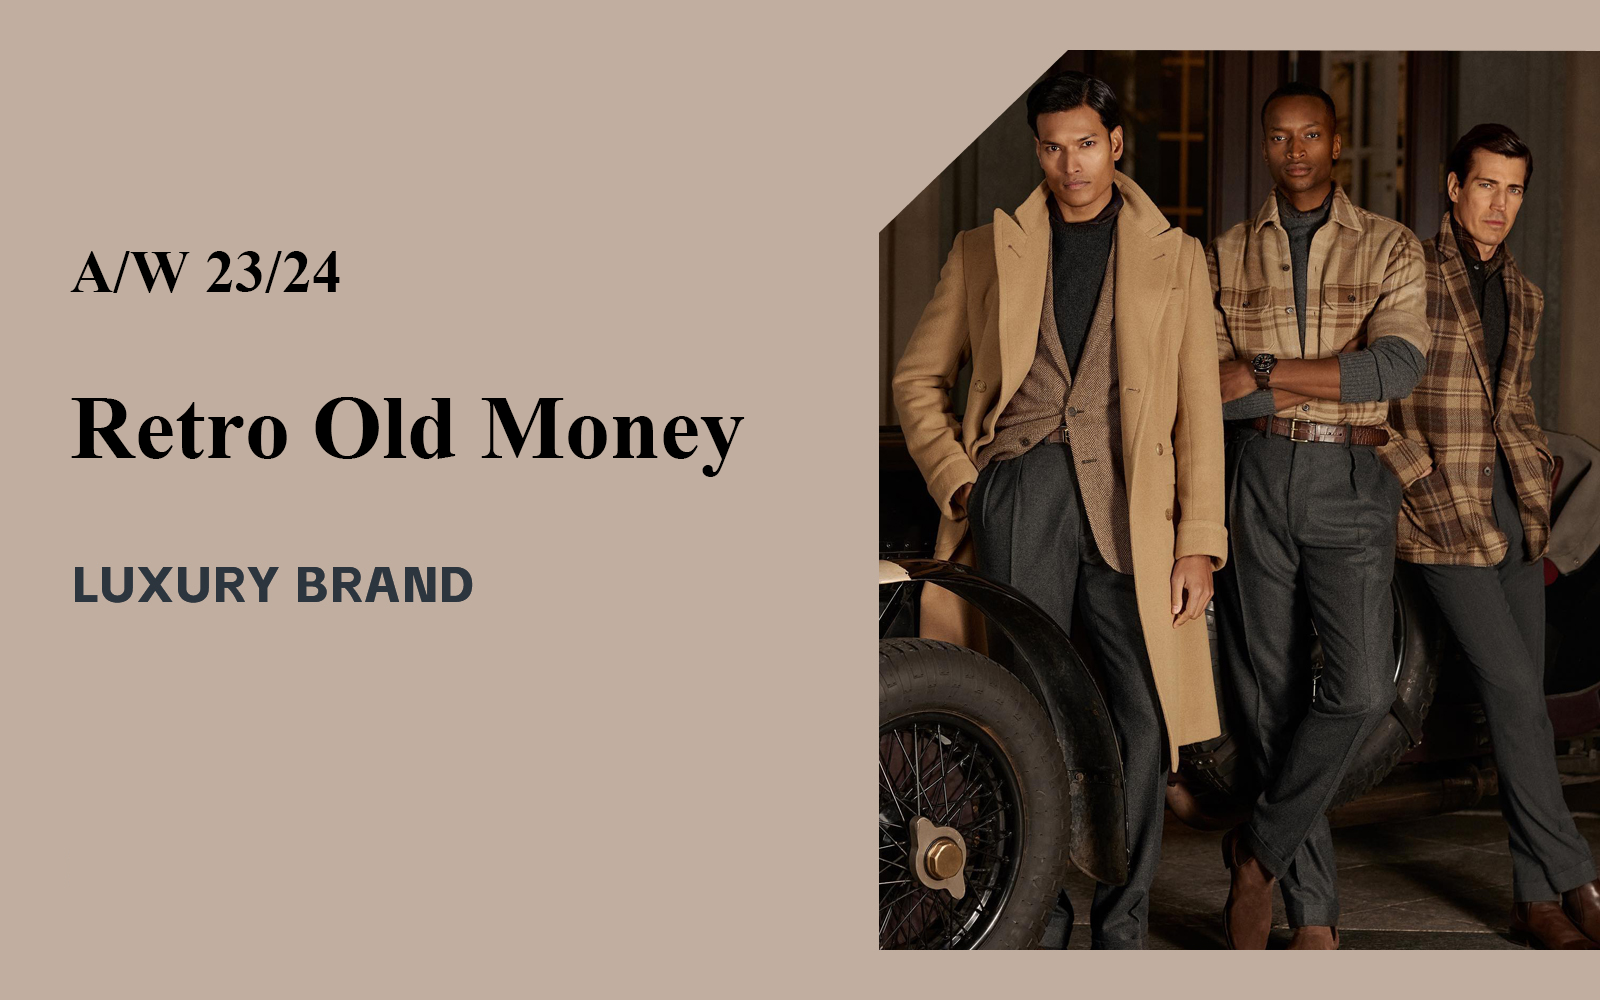 Retro Old Money Style -- The Comprehensive Analysis of Luxury Brand